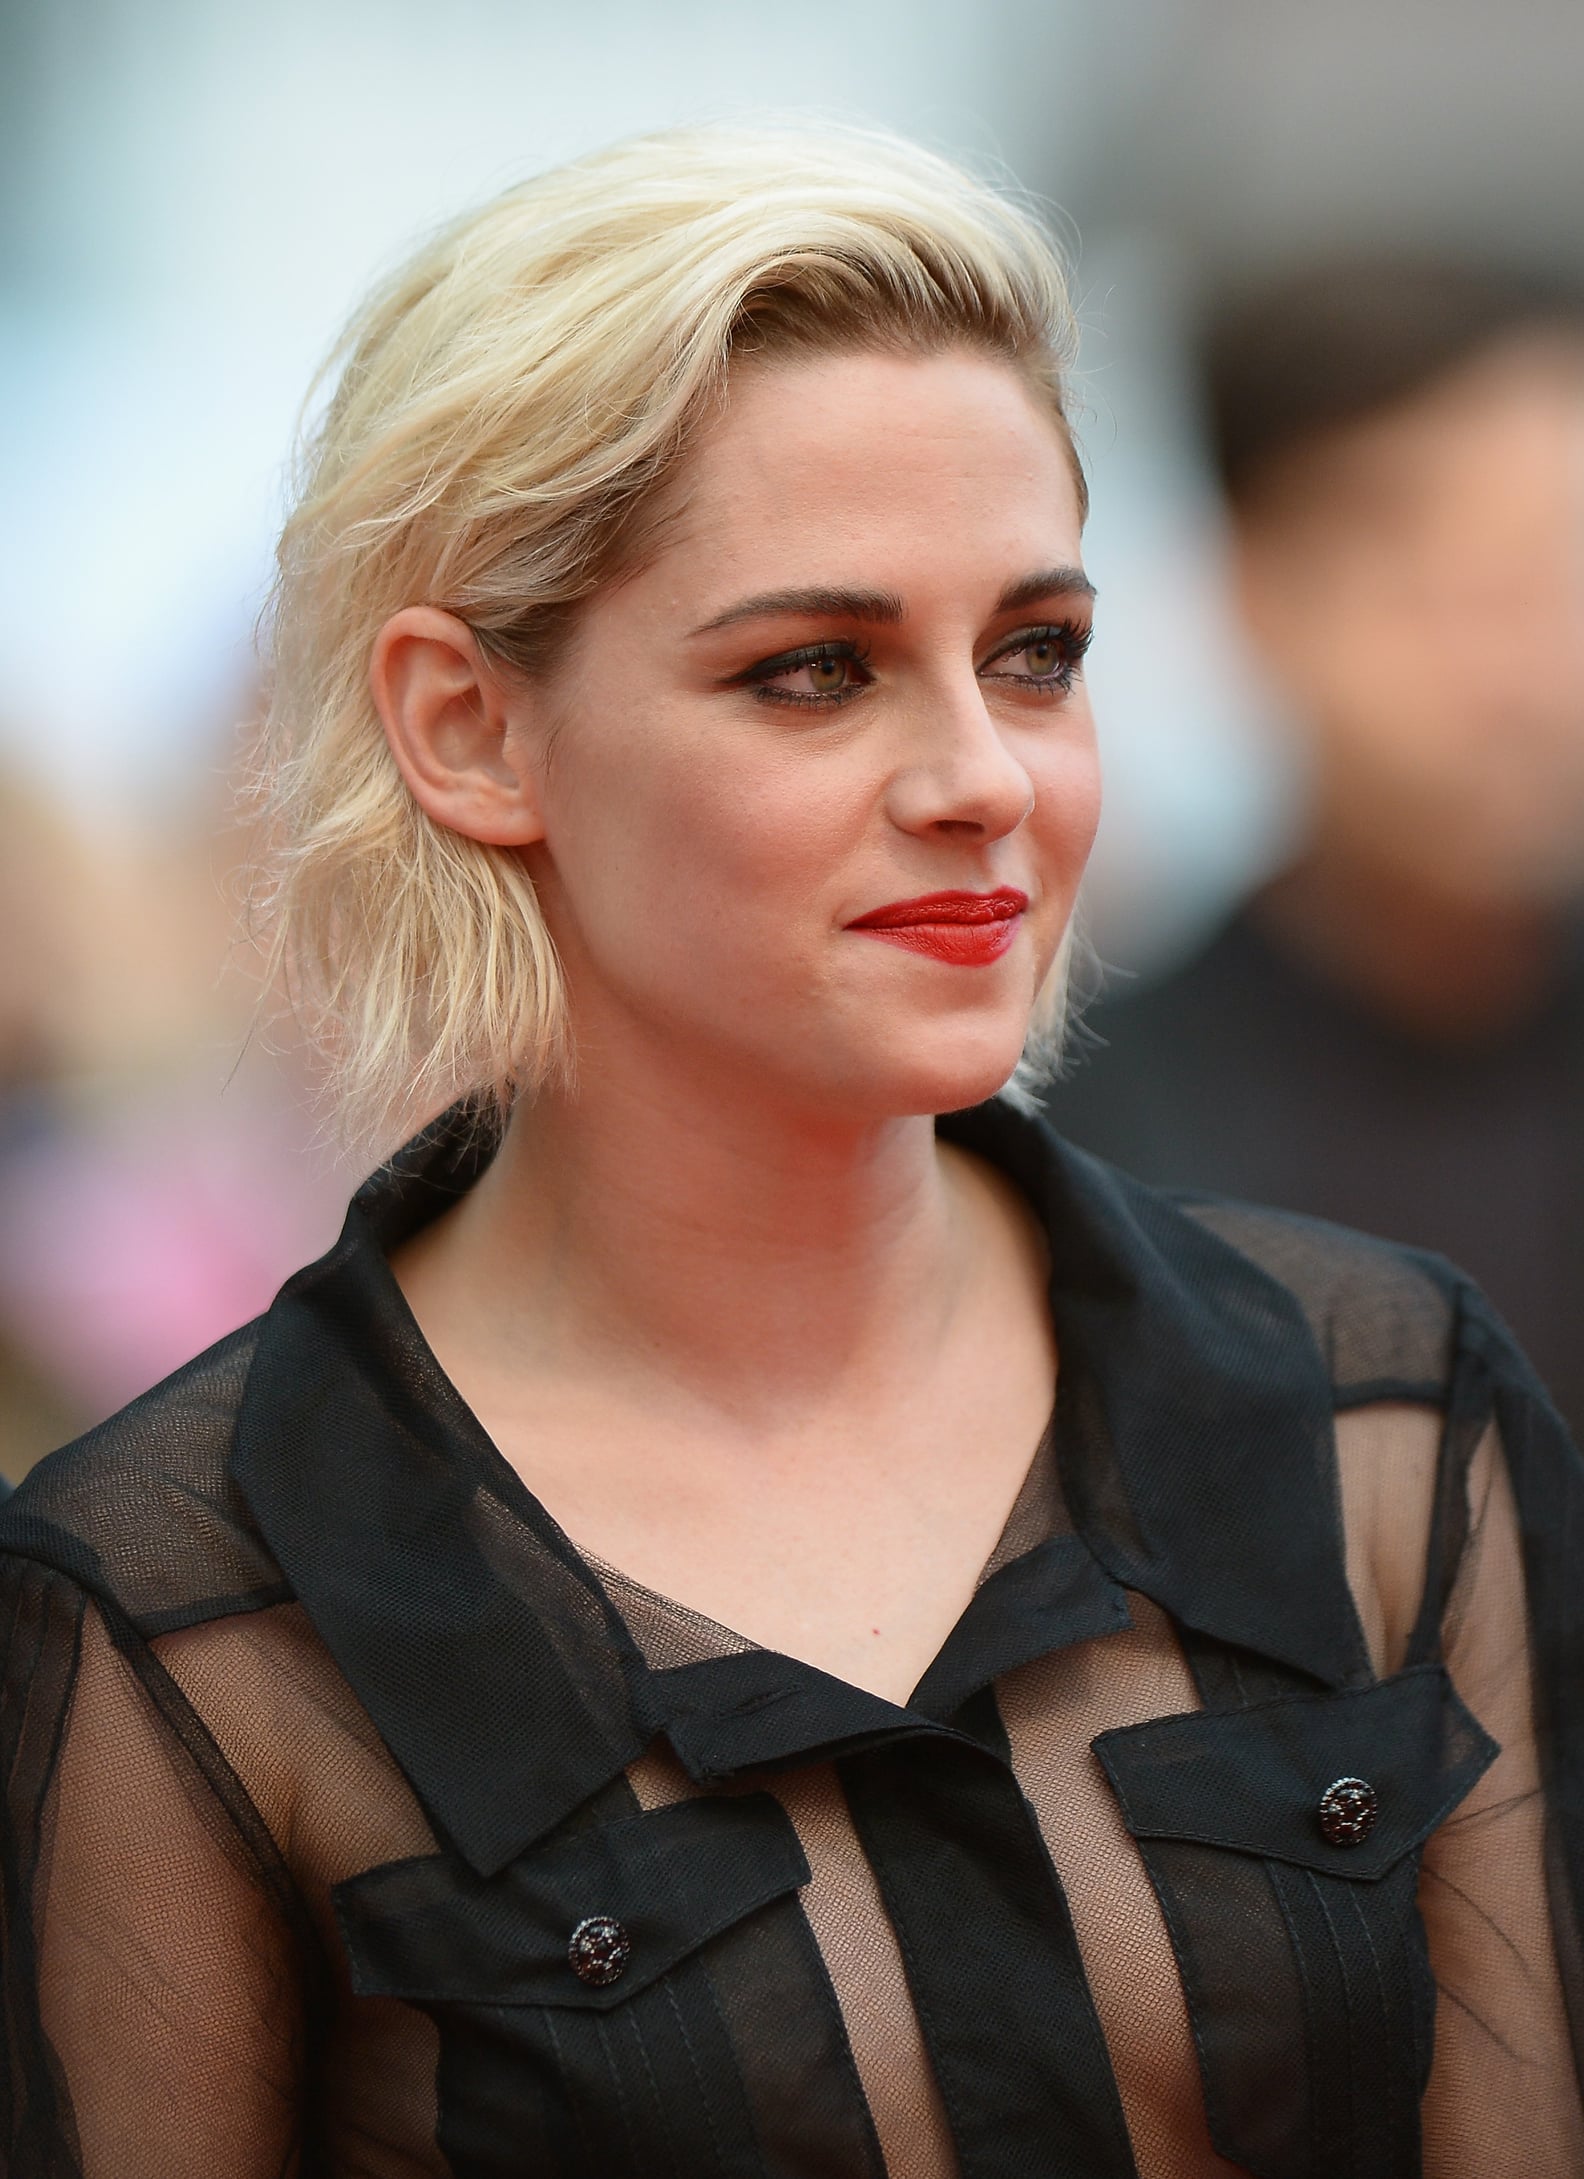 Cannes Film Festival Celebrity Hair and Makeup 2016 | POPSUGAR Beauty